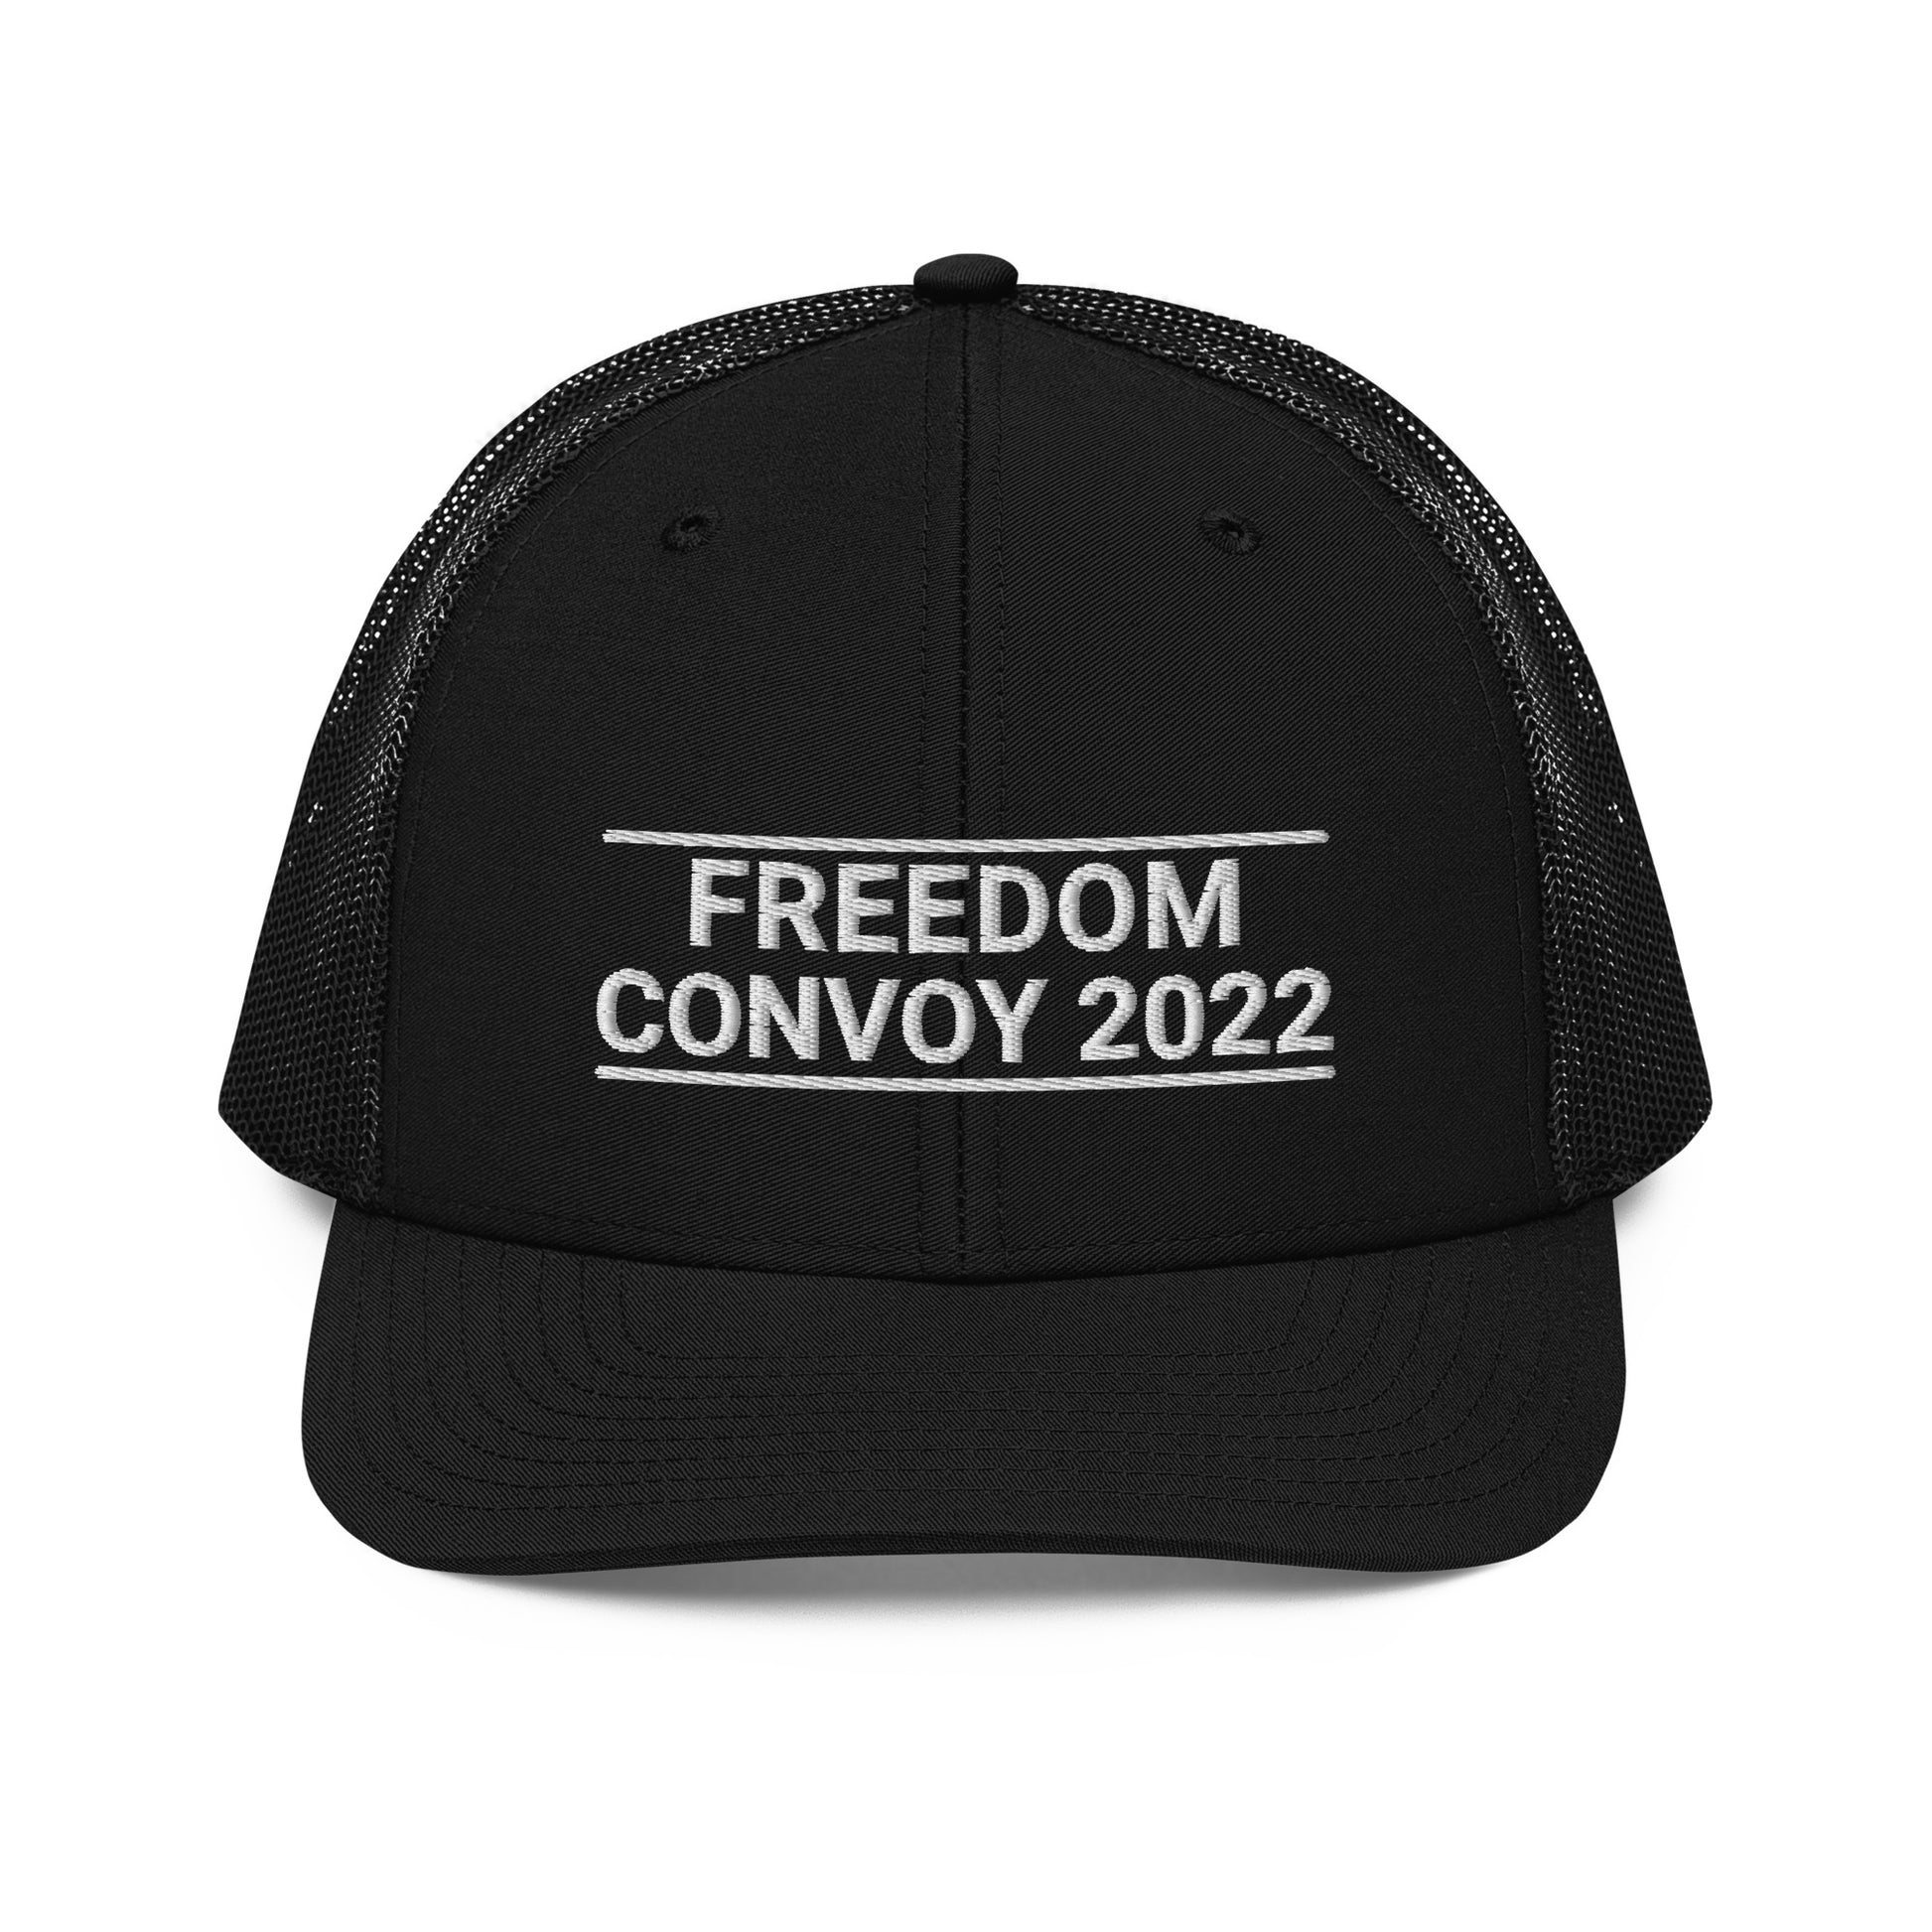 Freedom Convoy 2022 embroidered Richardson 1122 Black hat.